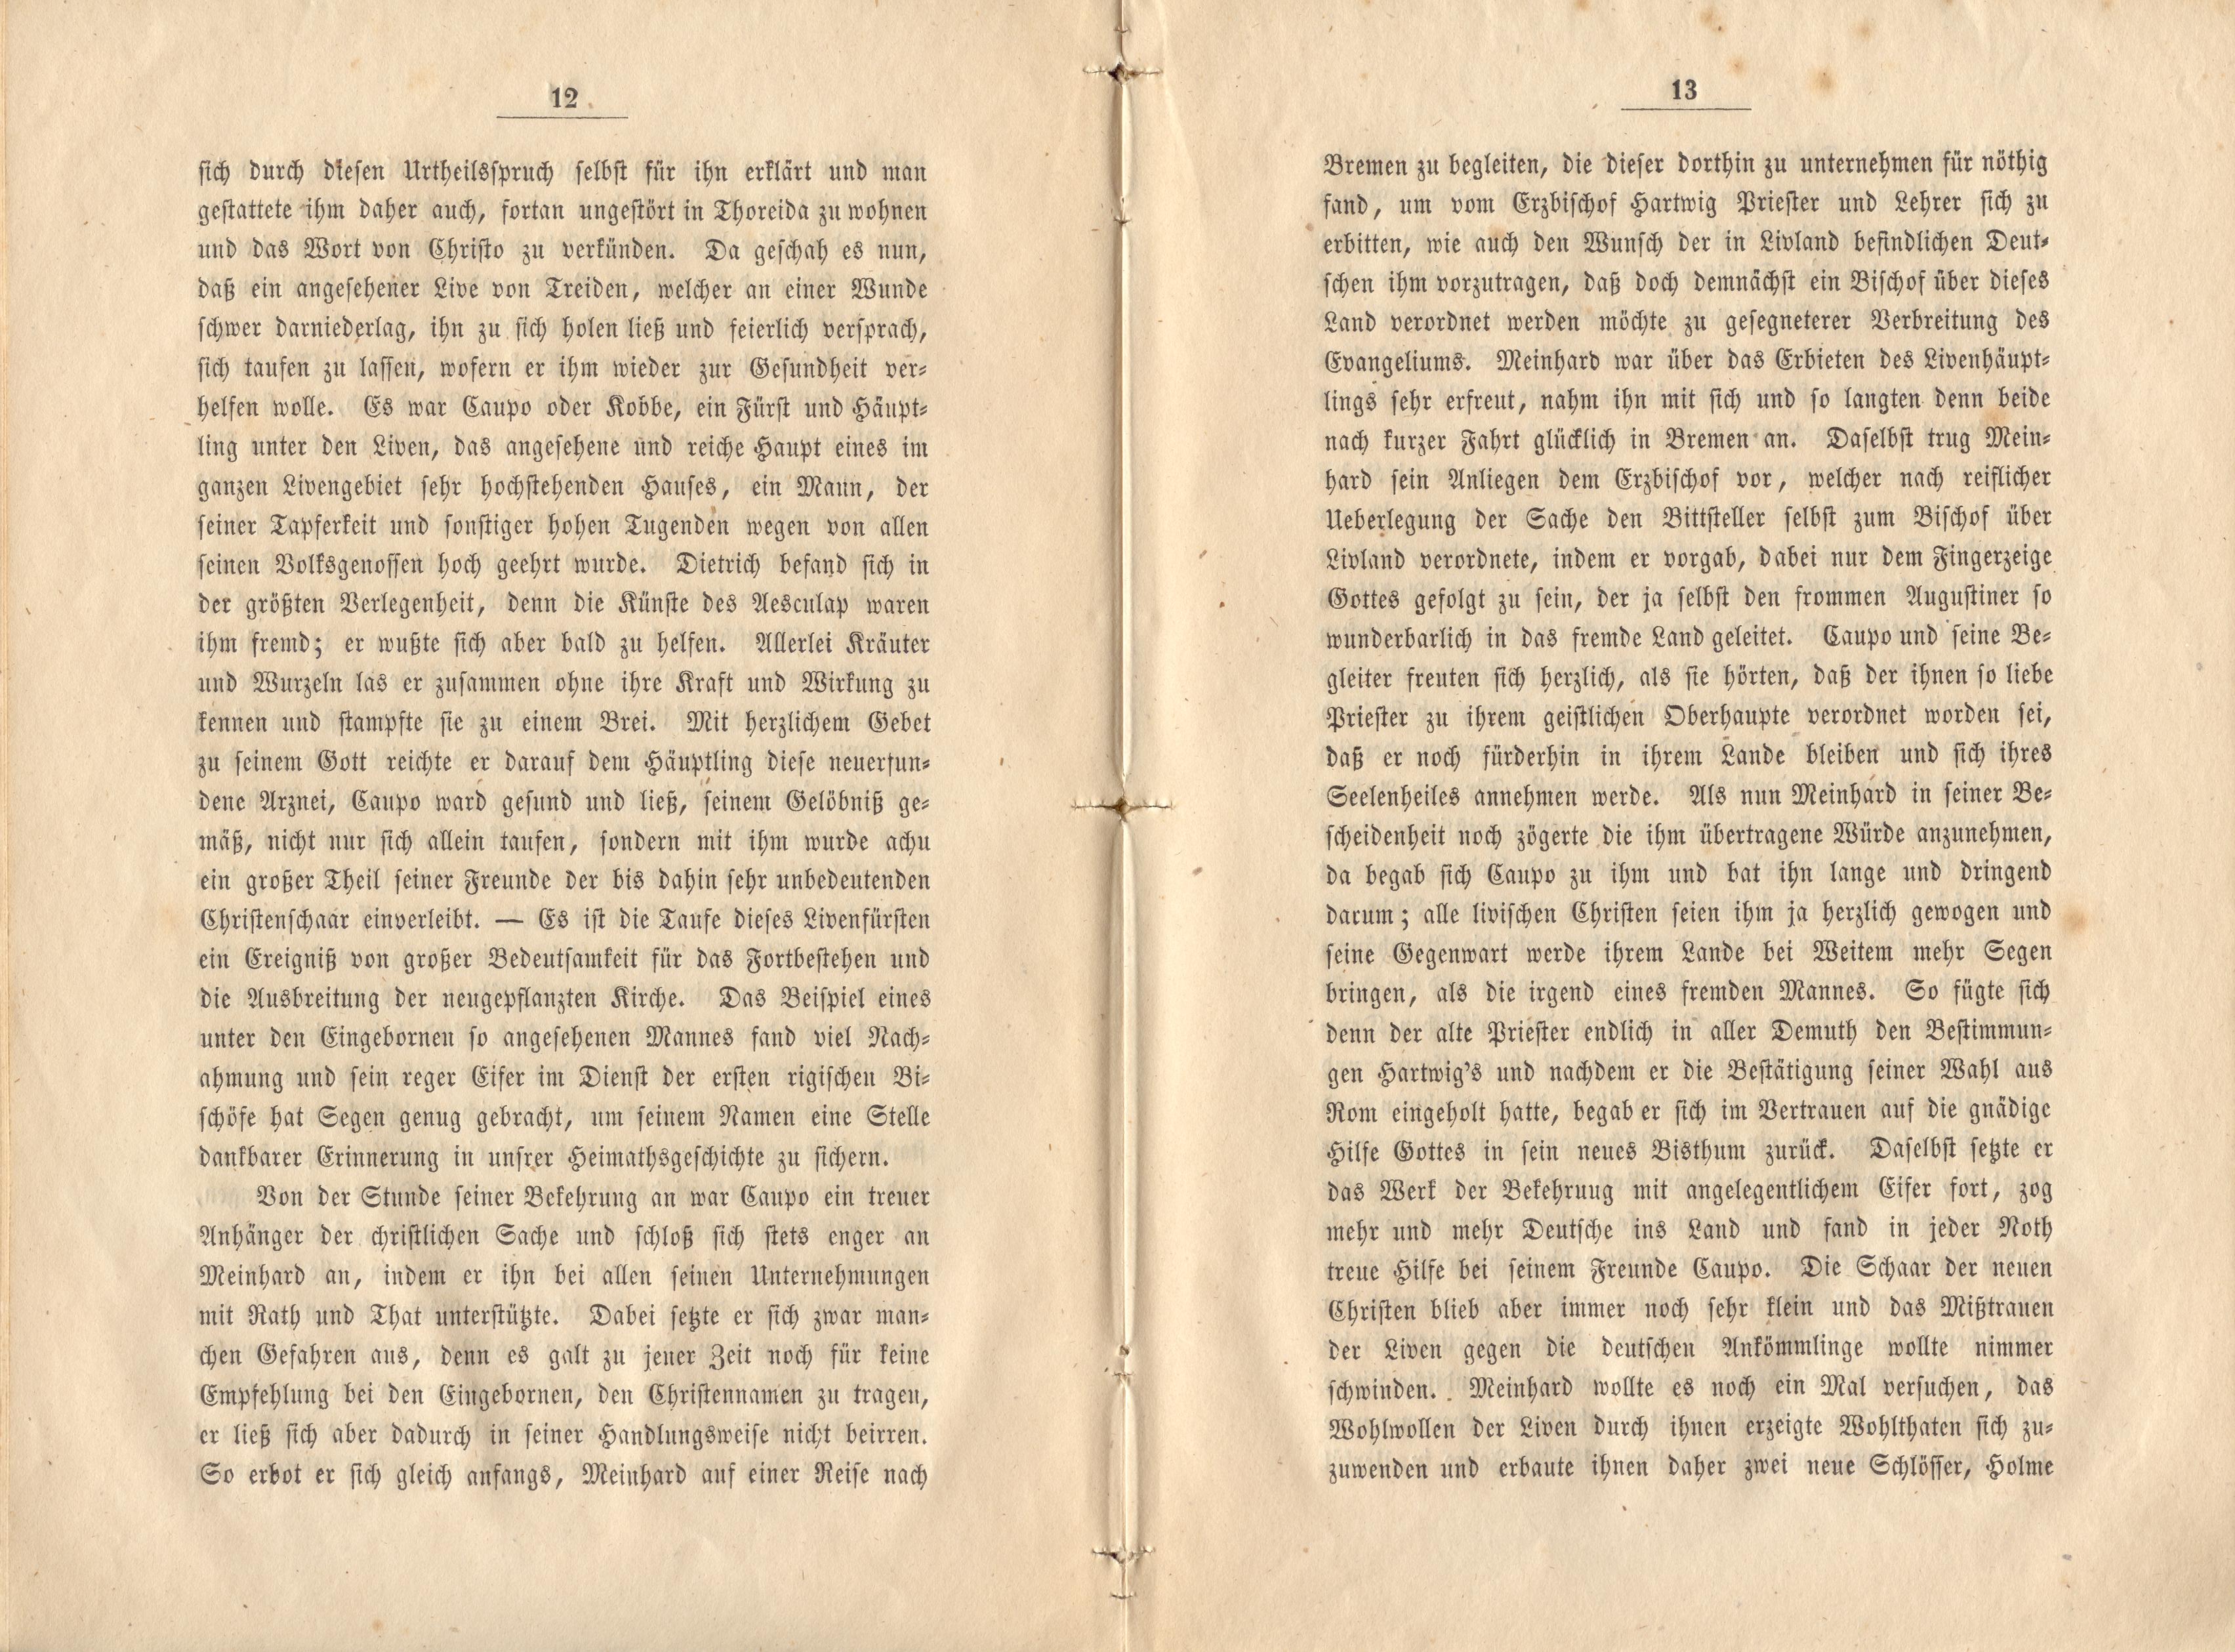 Felliner Blätter (1859) | 7. (12-13) Основной текст